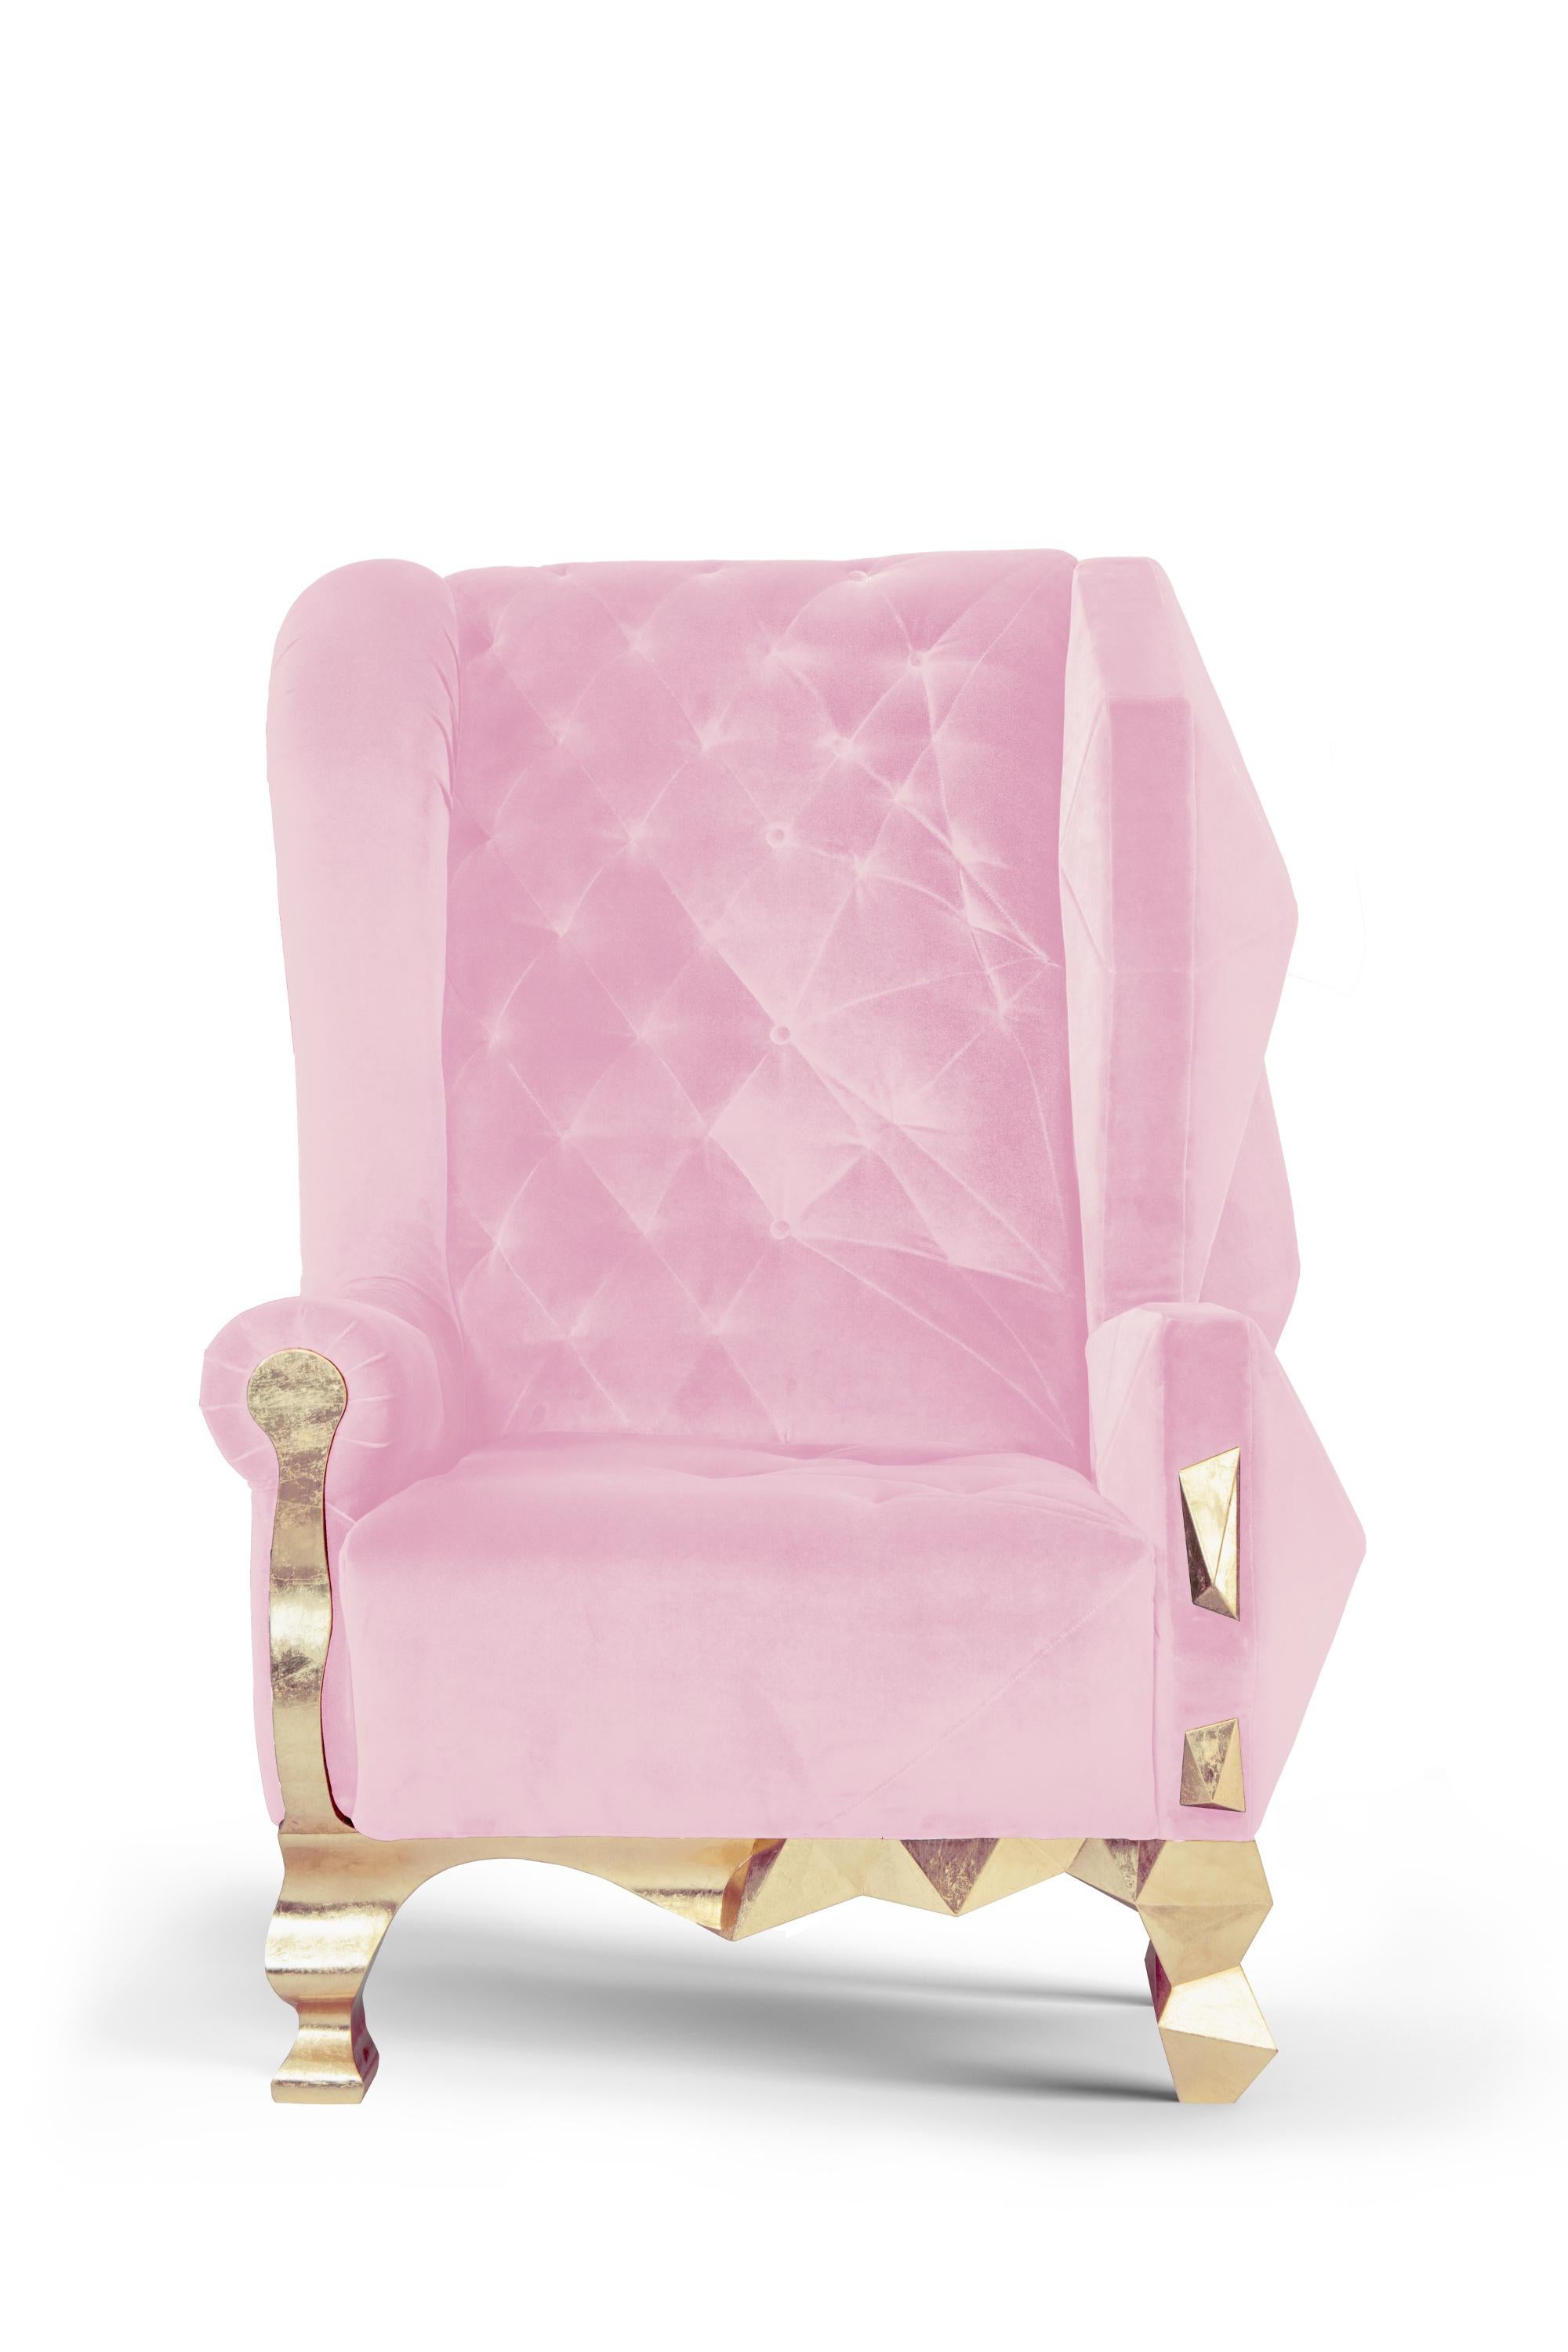 pink armchair